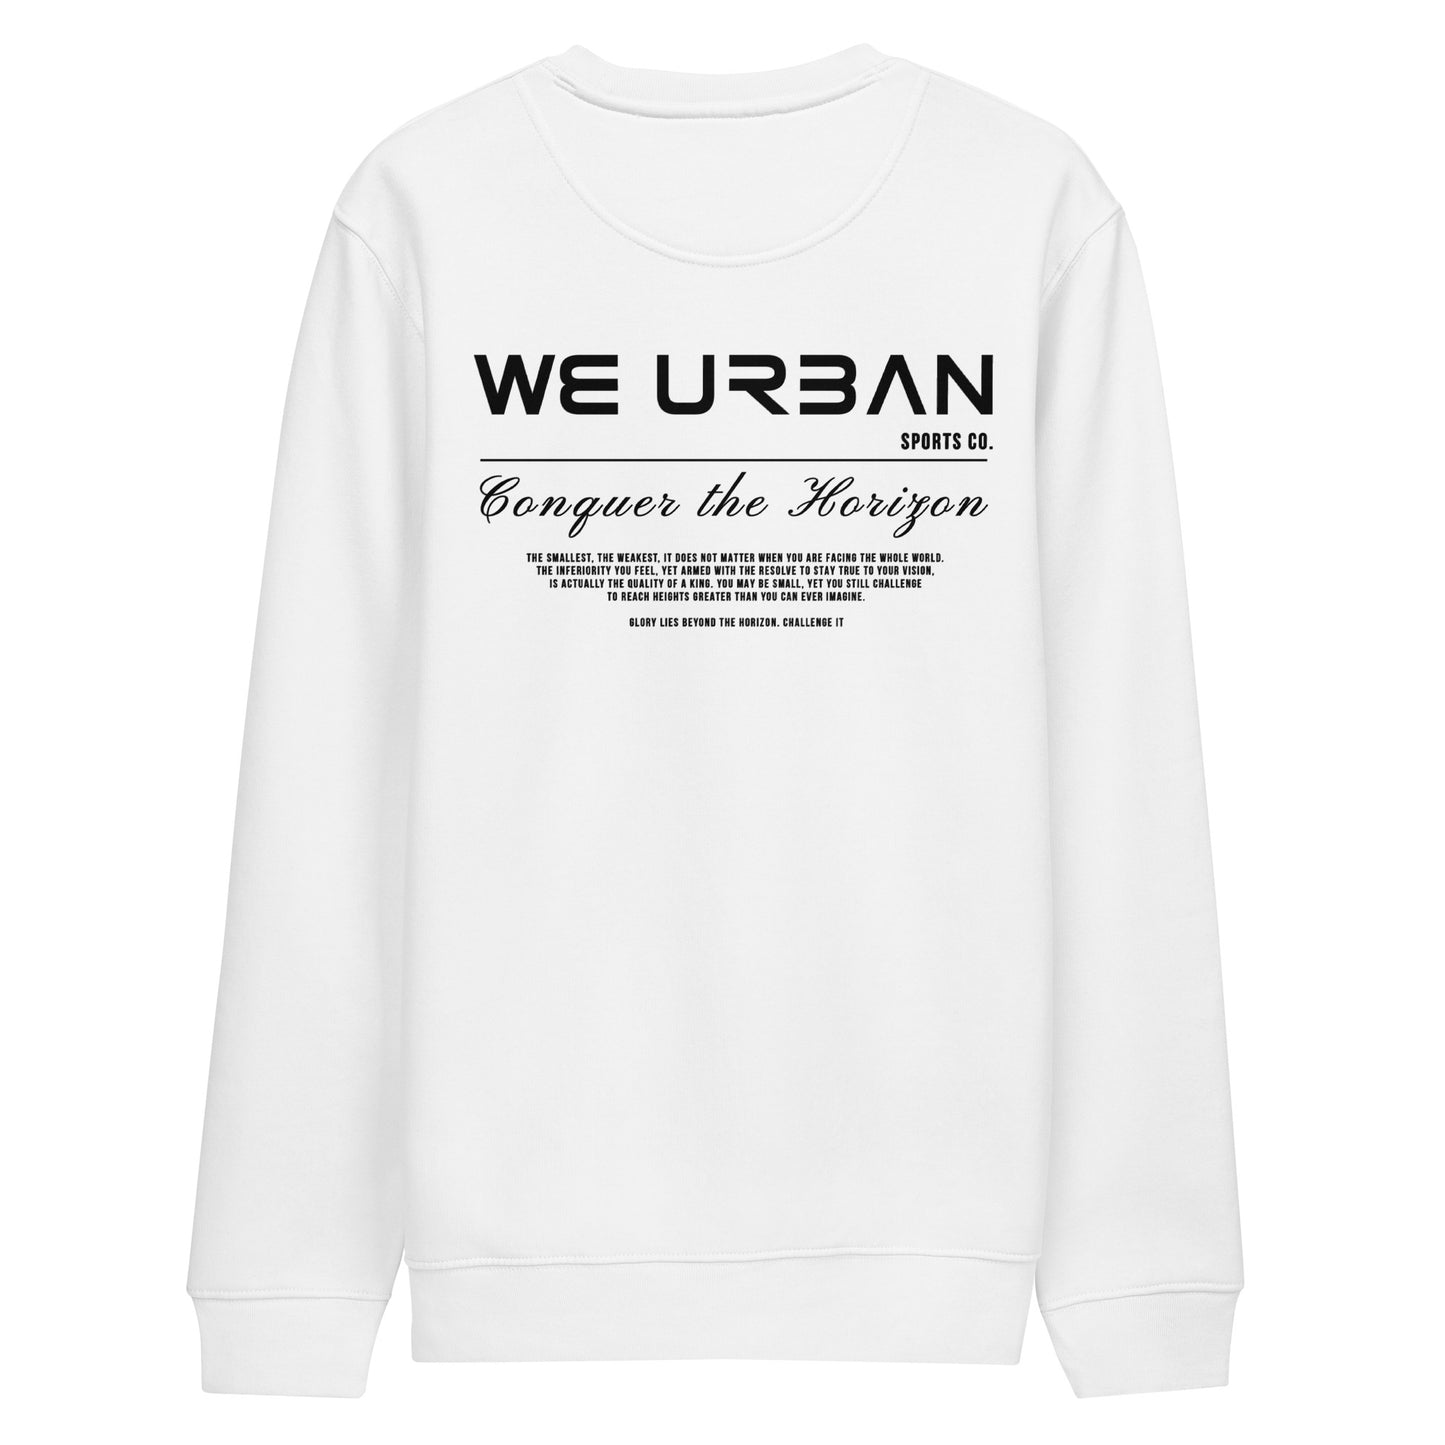 Conquer the Horizon eco sweatshirt